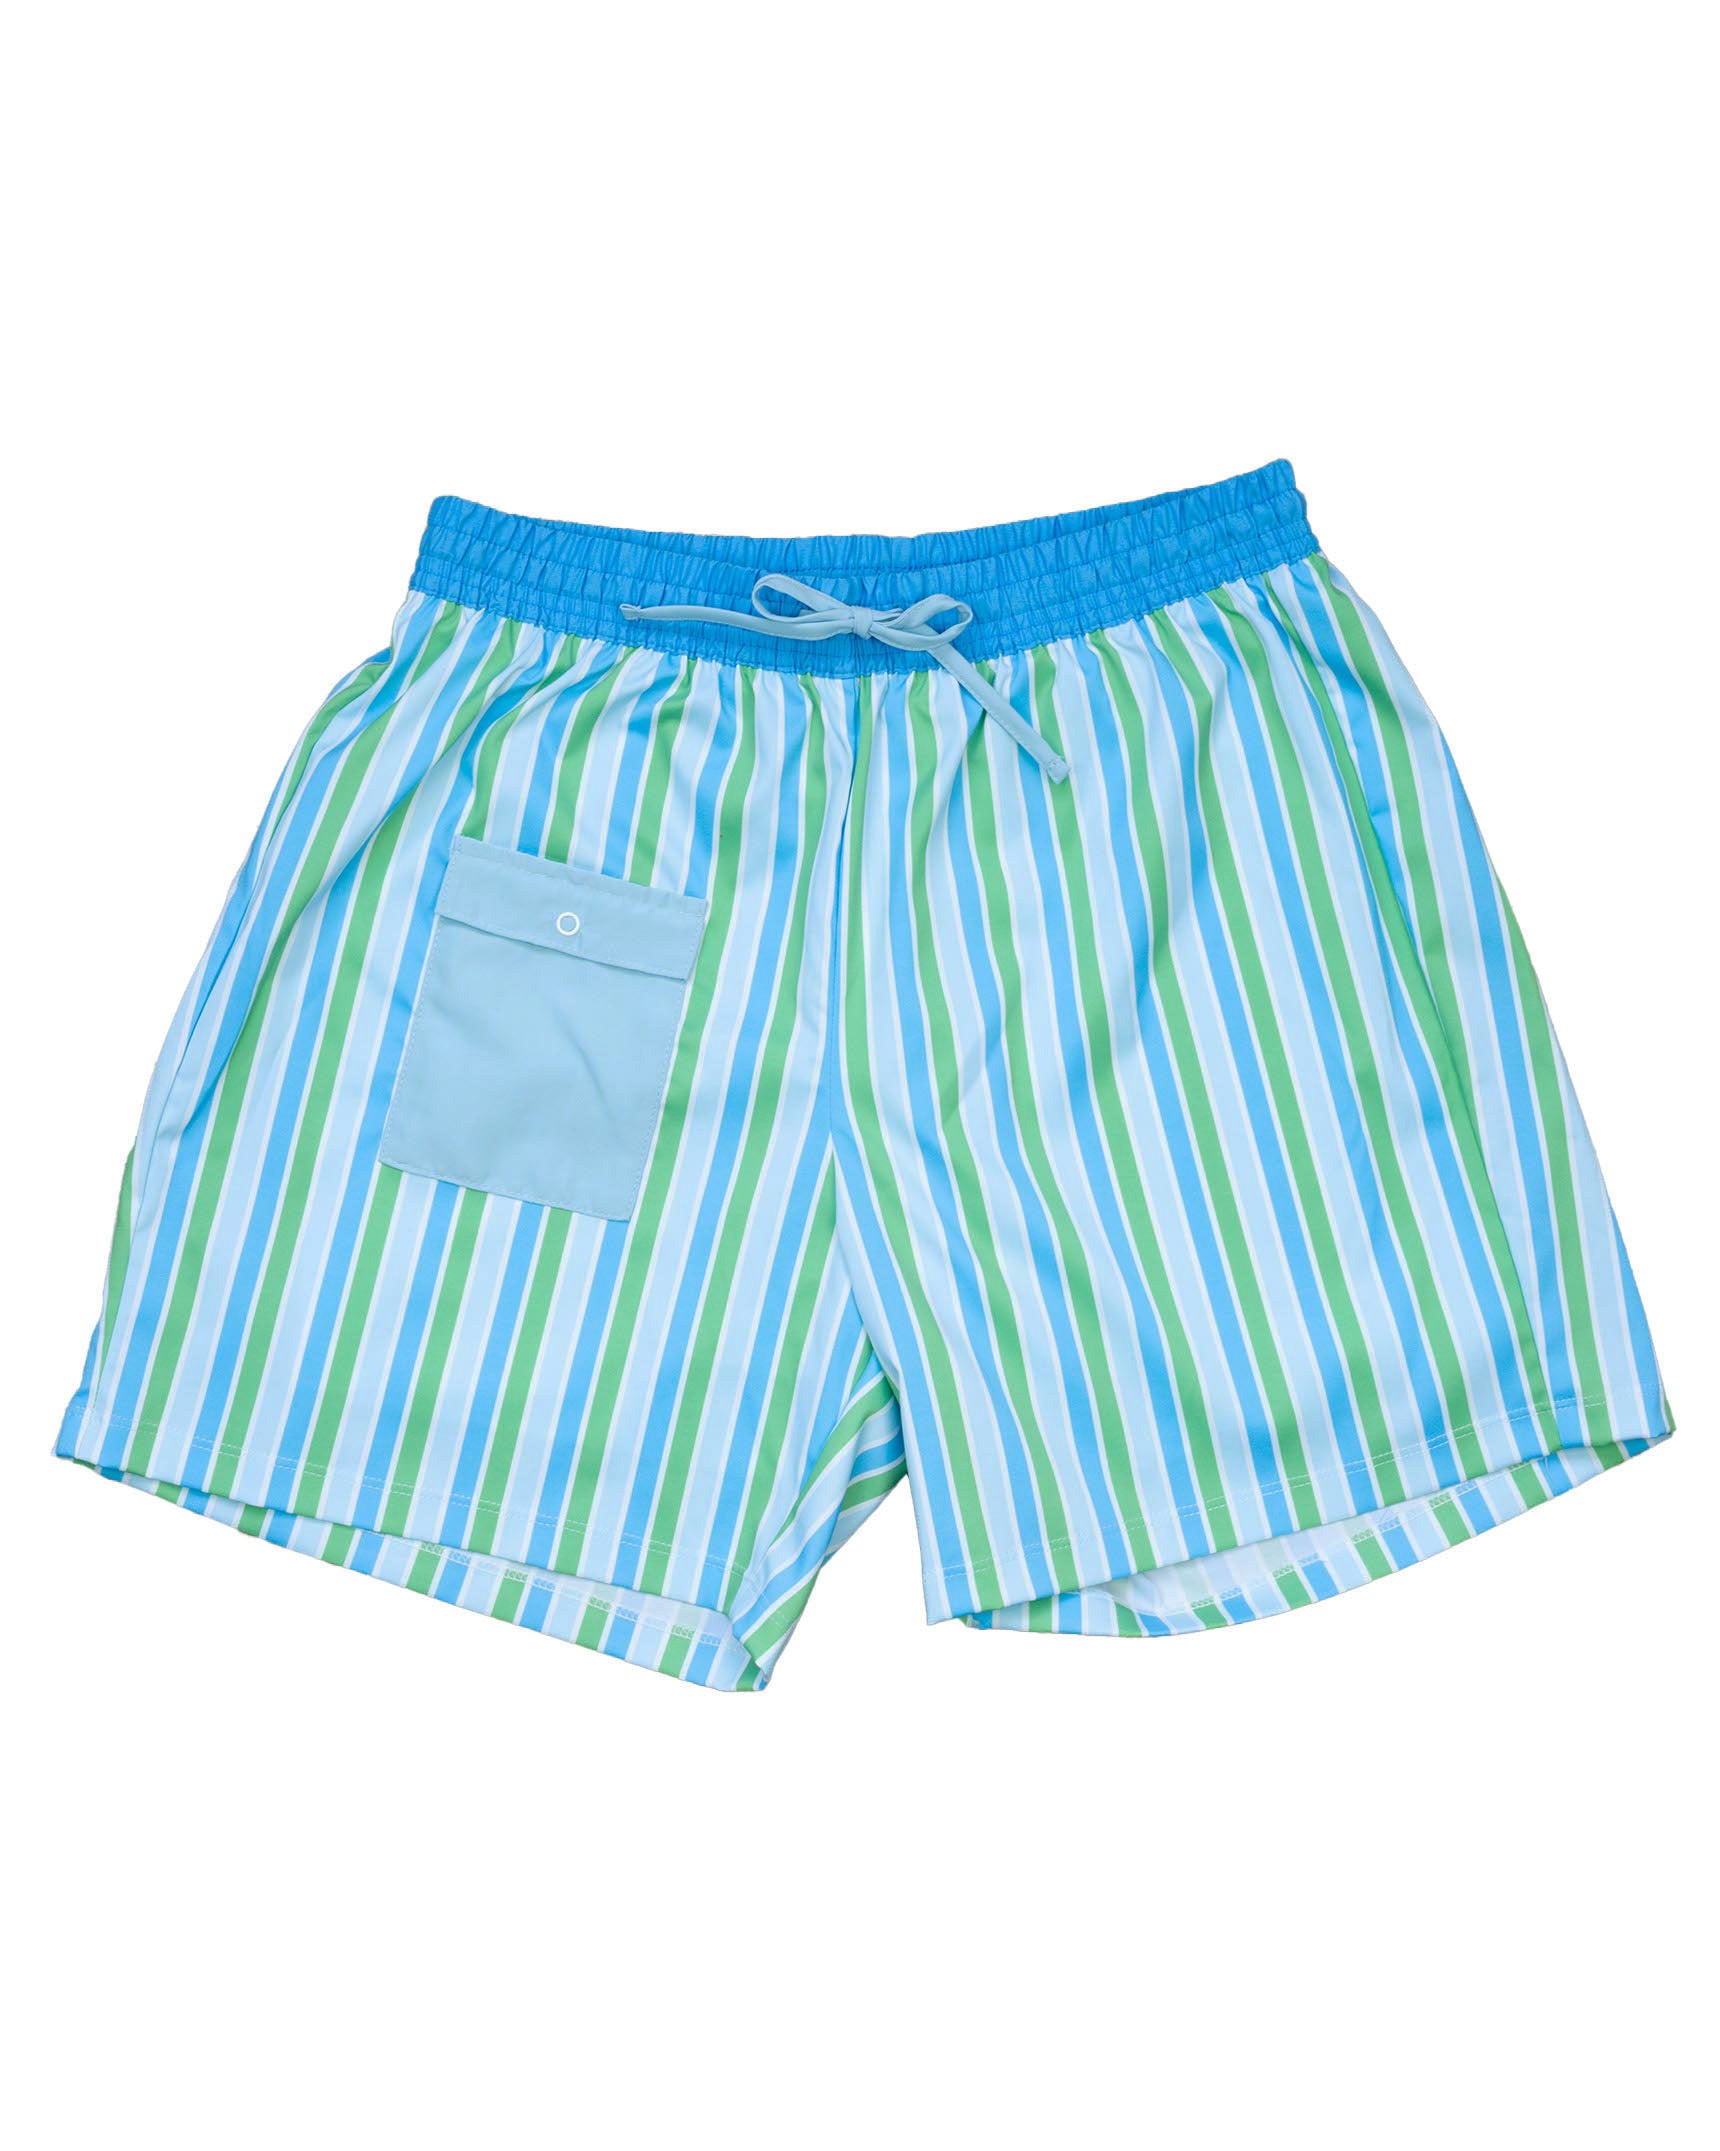 Men's Blue and Green Striped Swim Trunks-FINAL SALE